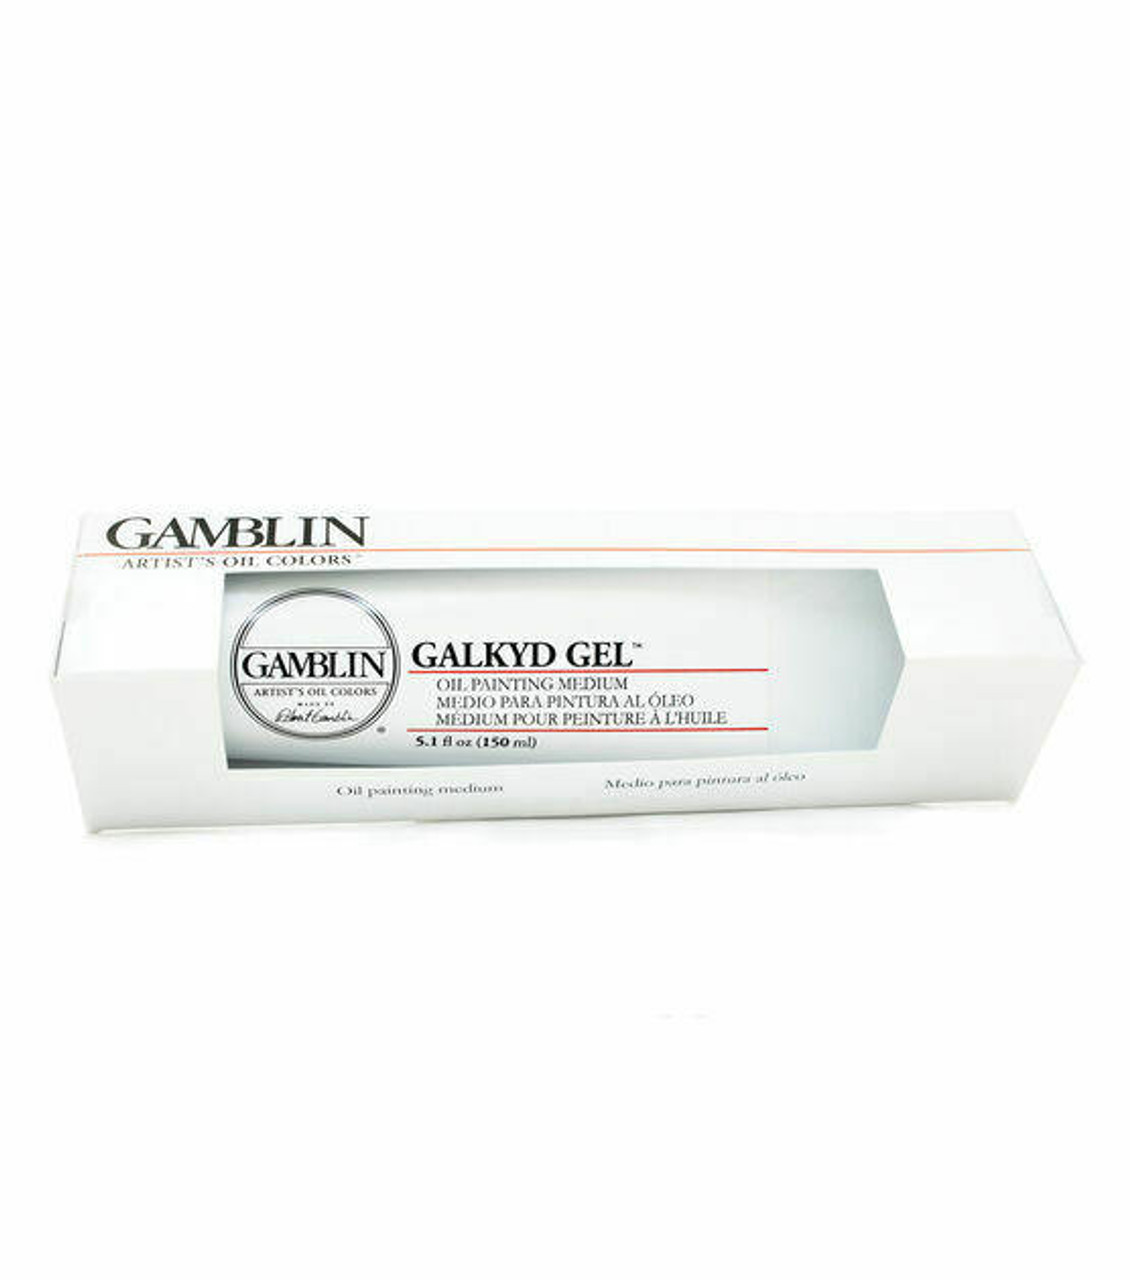 Gamblin - Galkyd Gel - 150ml Tube - Sam Flax Atlanta